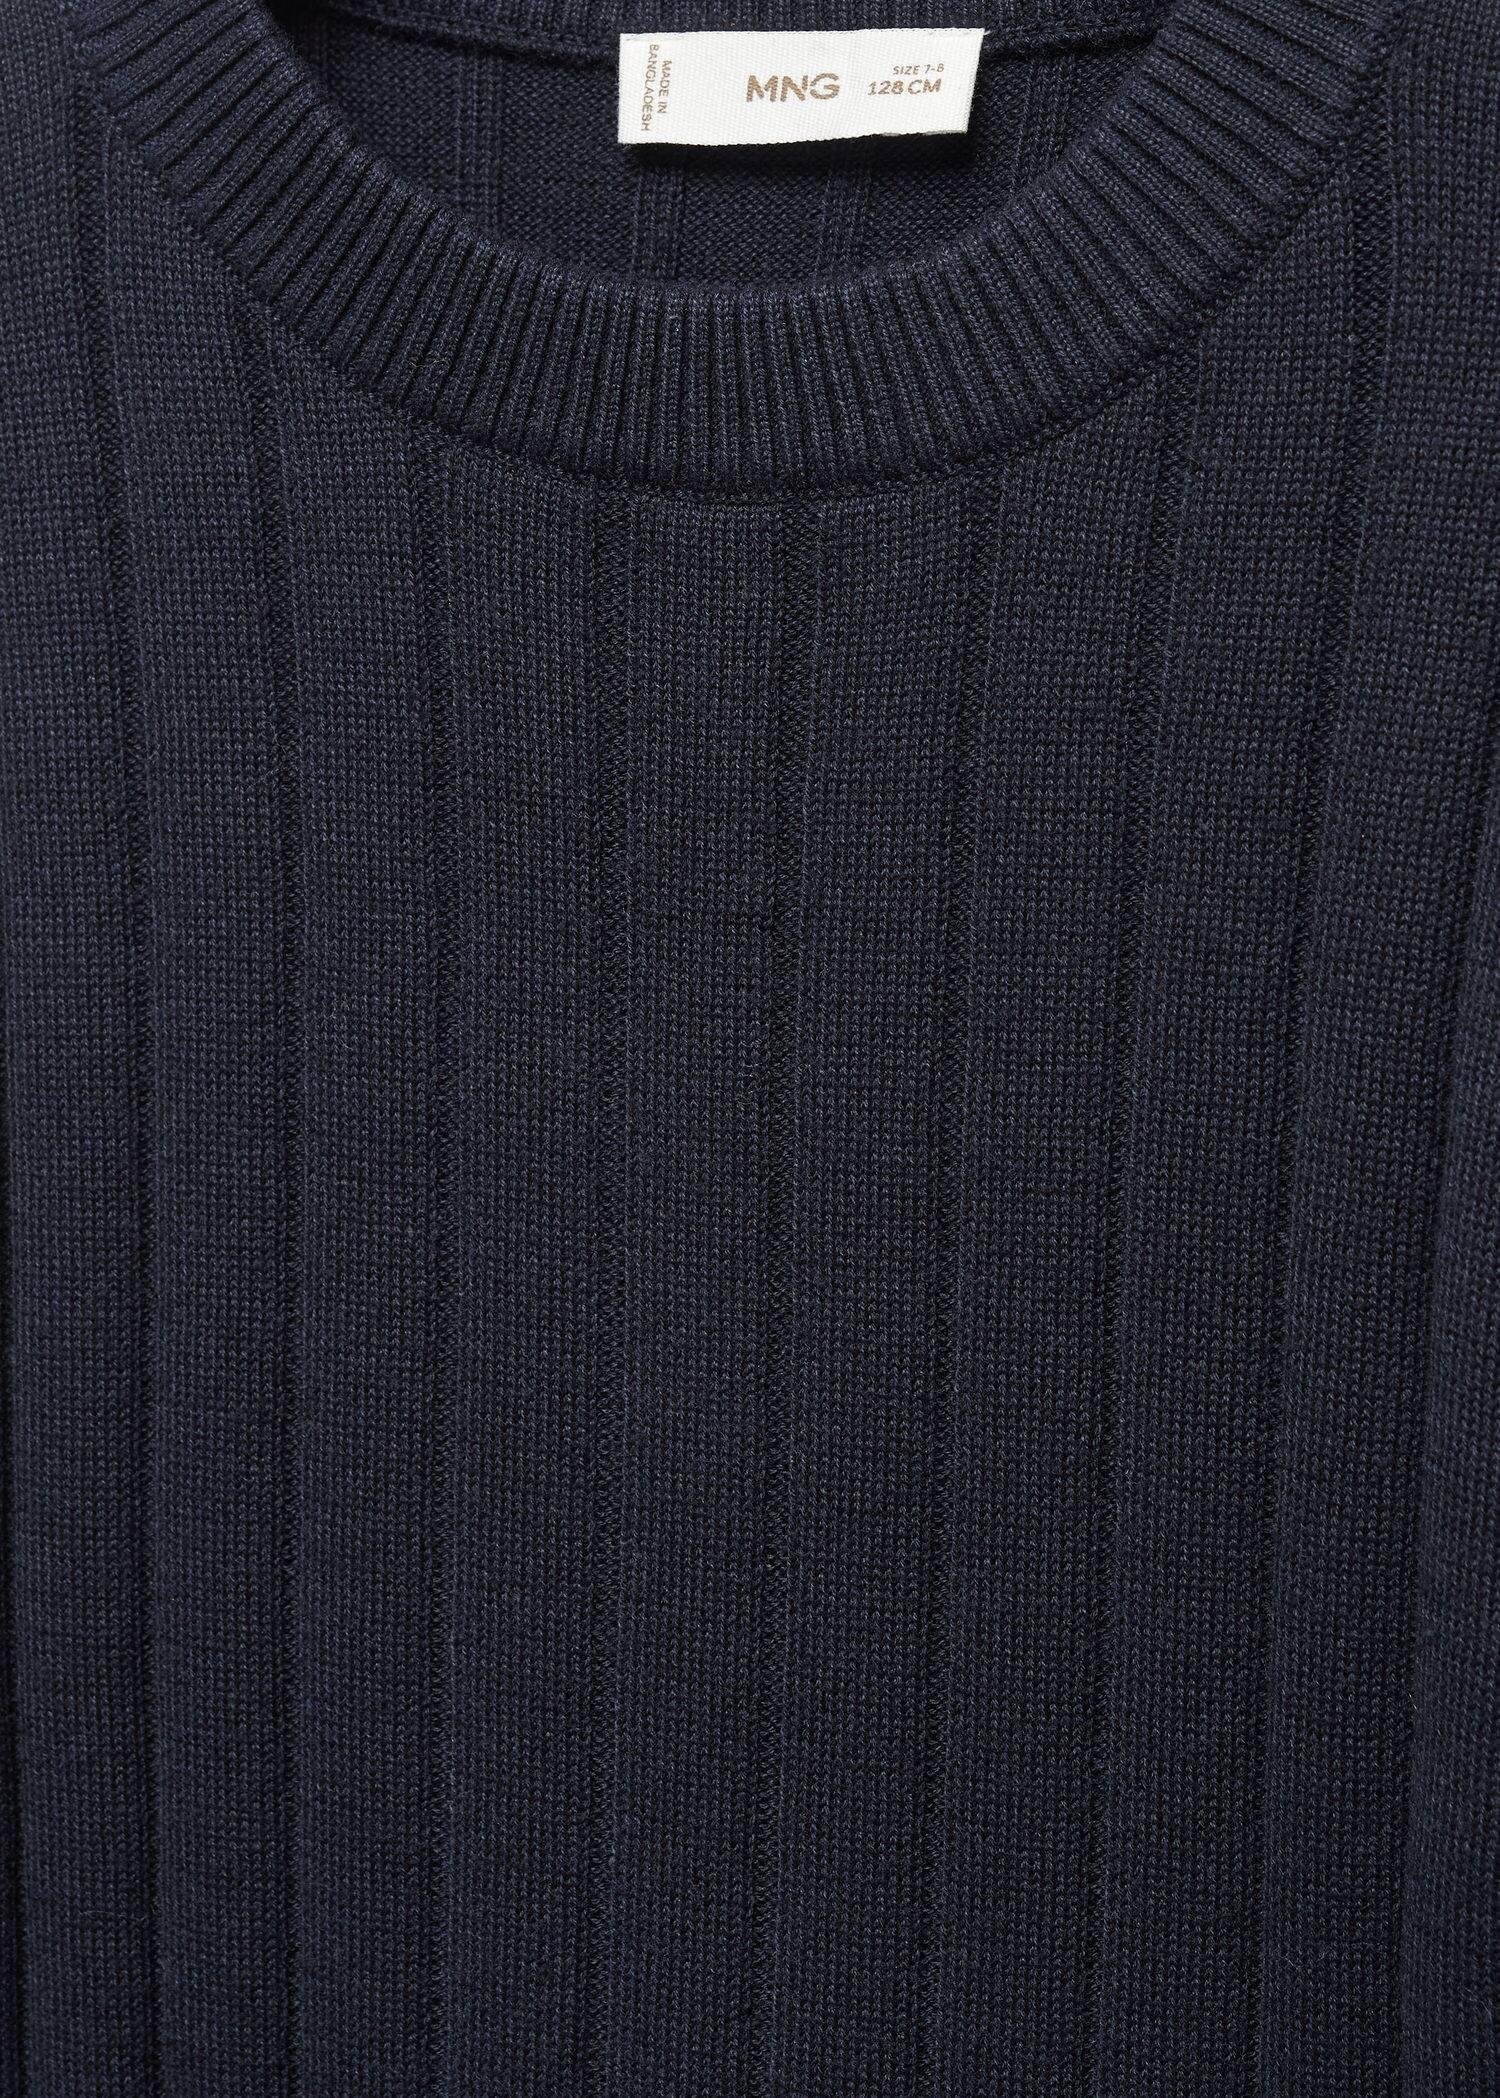 Mango - Navy Striped Knit Sweater, Kids Girls